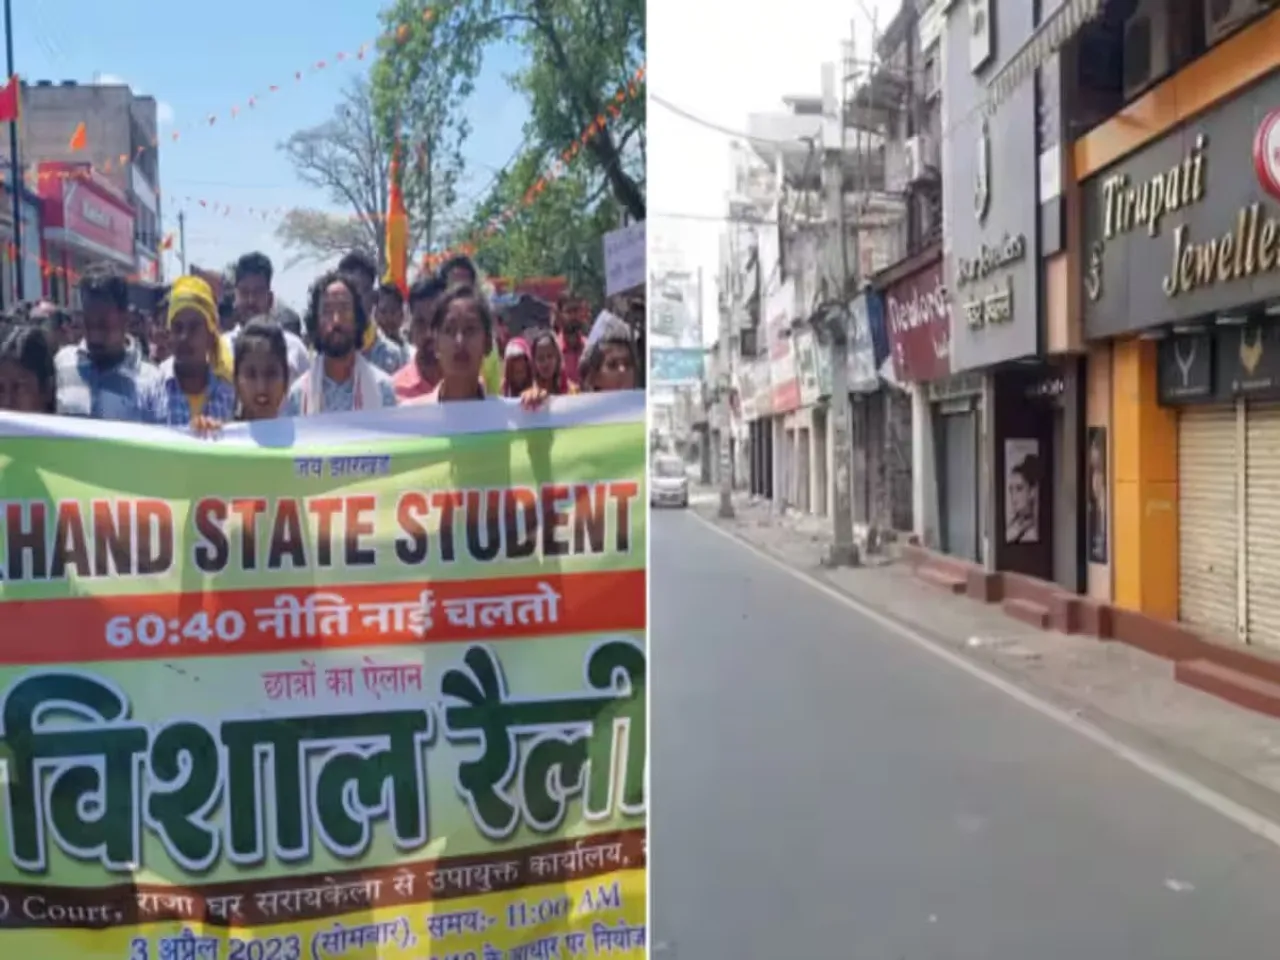 JSSU's Jharkhand bandh: No impact in Ranchi